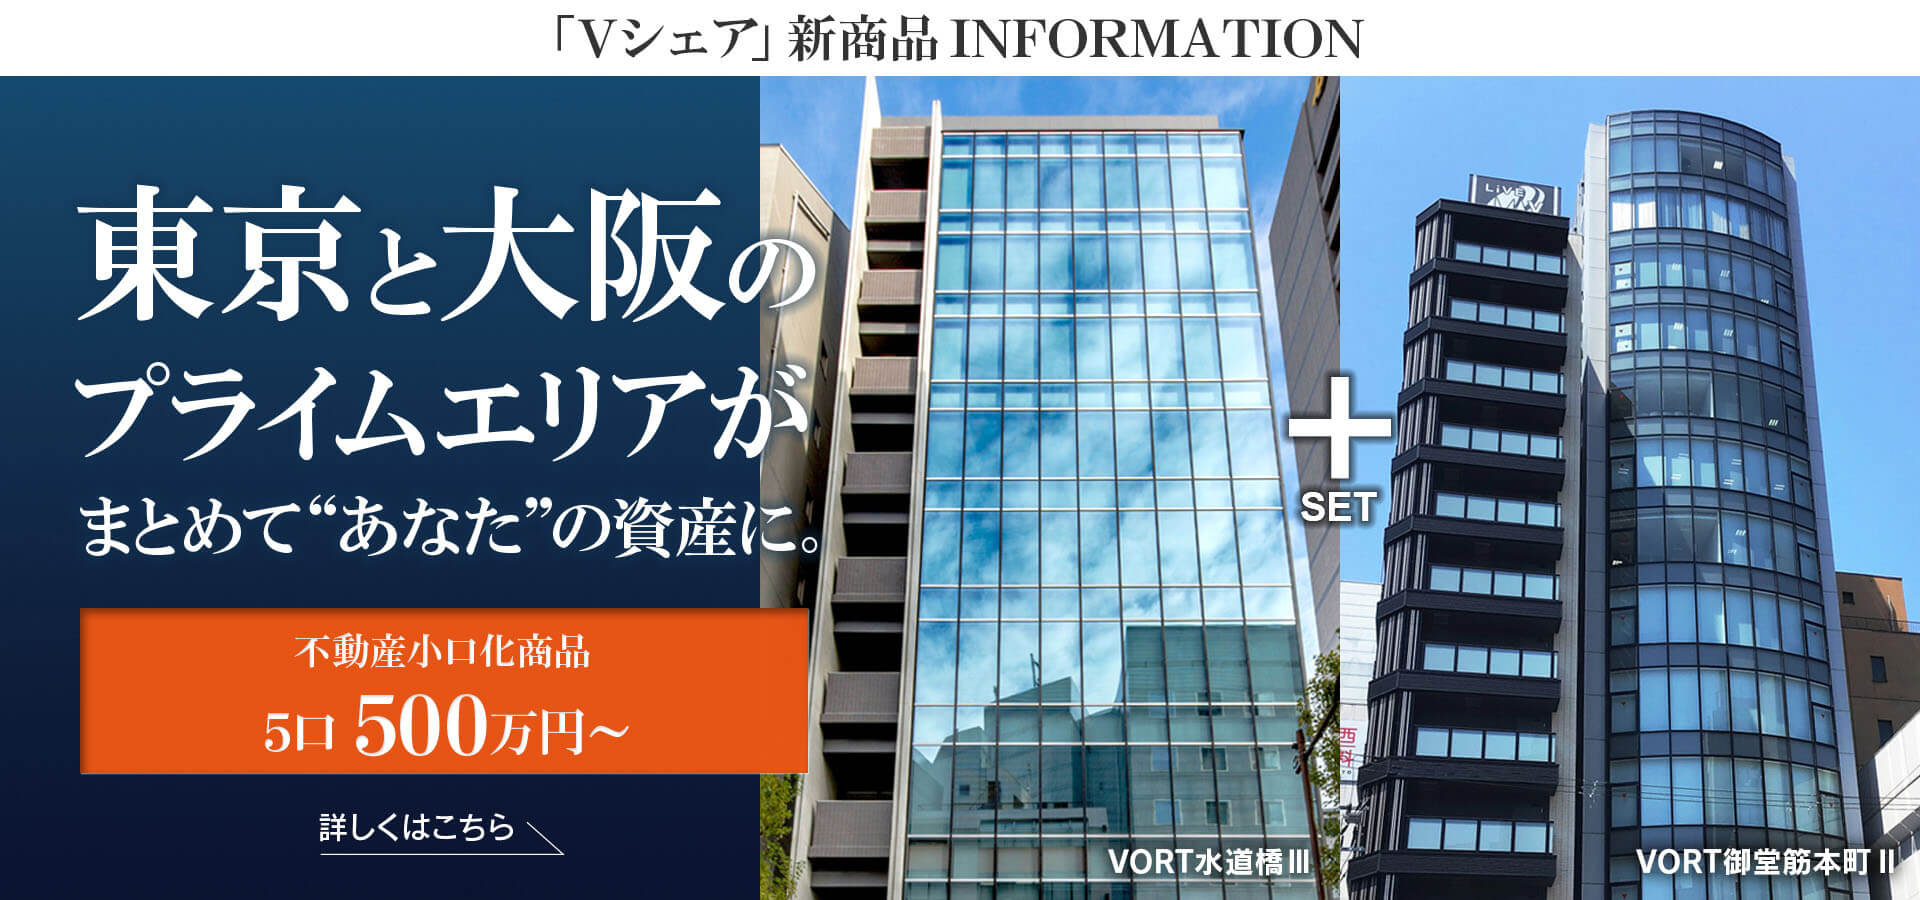 「Vシェア」新商品INFORMATION　東京と大阪の プライムエリアがまとめて“あなた”の資産に。